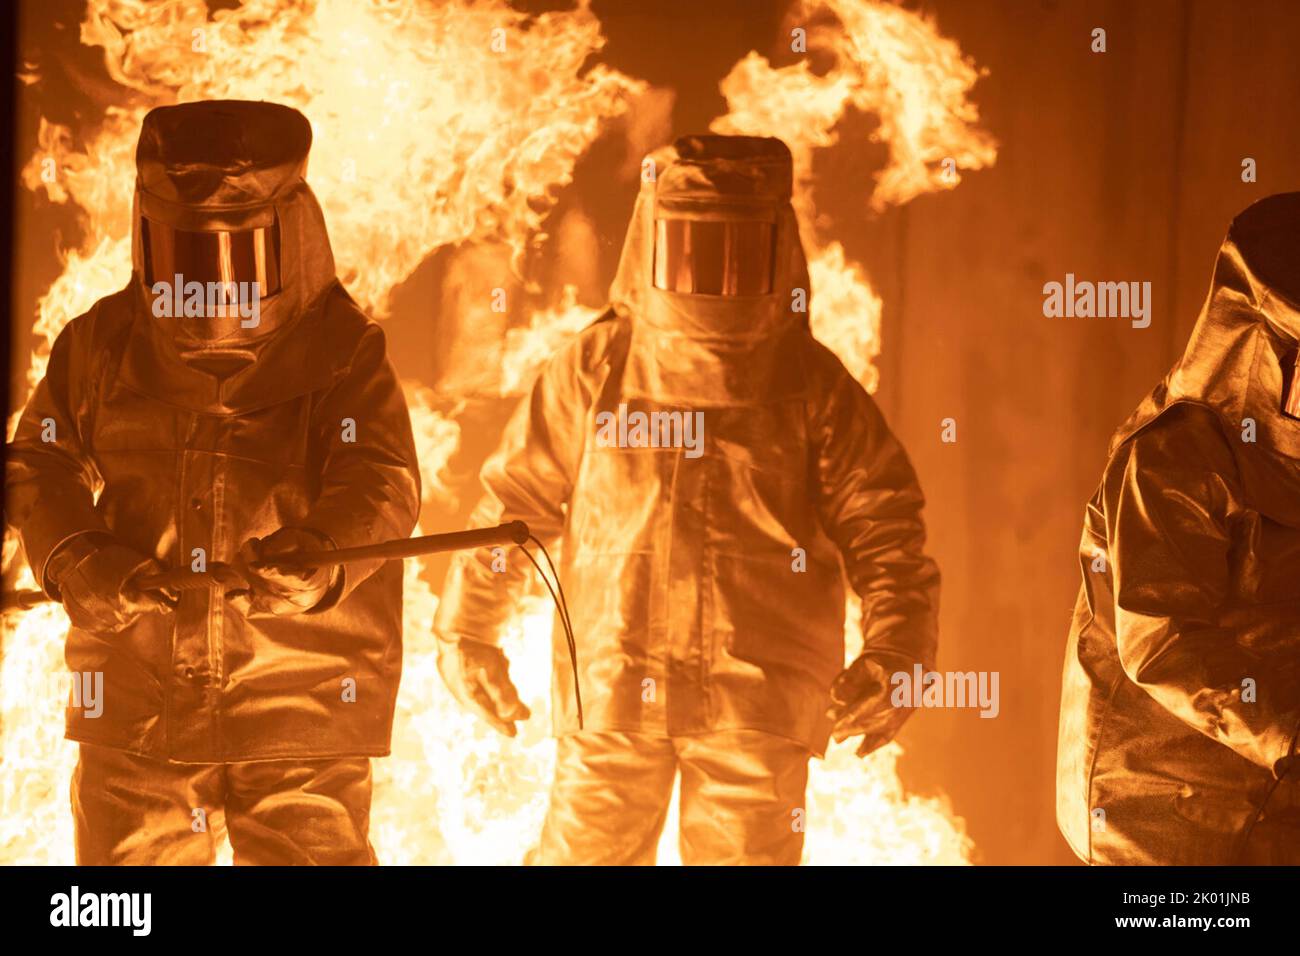 FIRESTARTER (2022) KEITH THOMAS (DIR) UNIVERSAL PICORS/MOVIESTORE COLLECTION Stockfoto